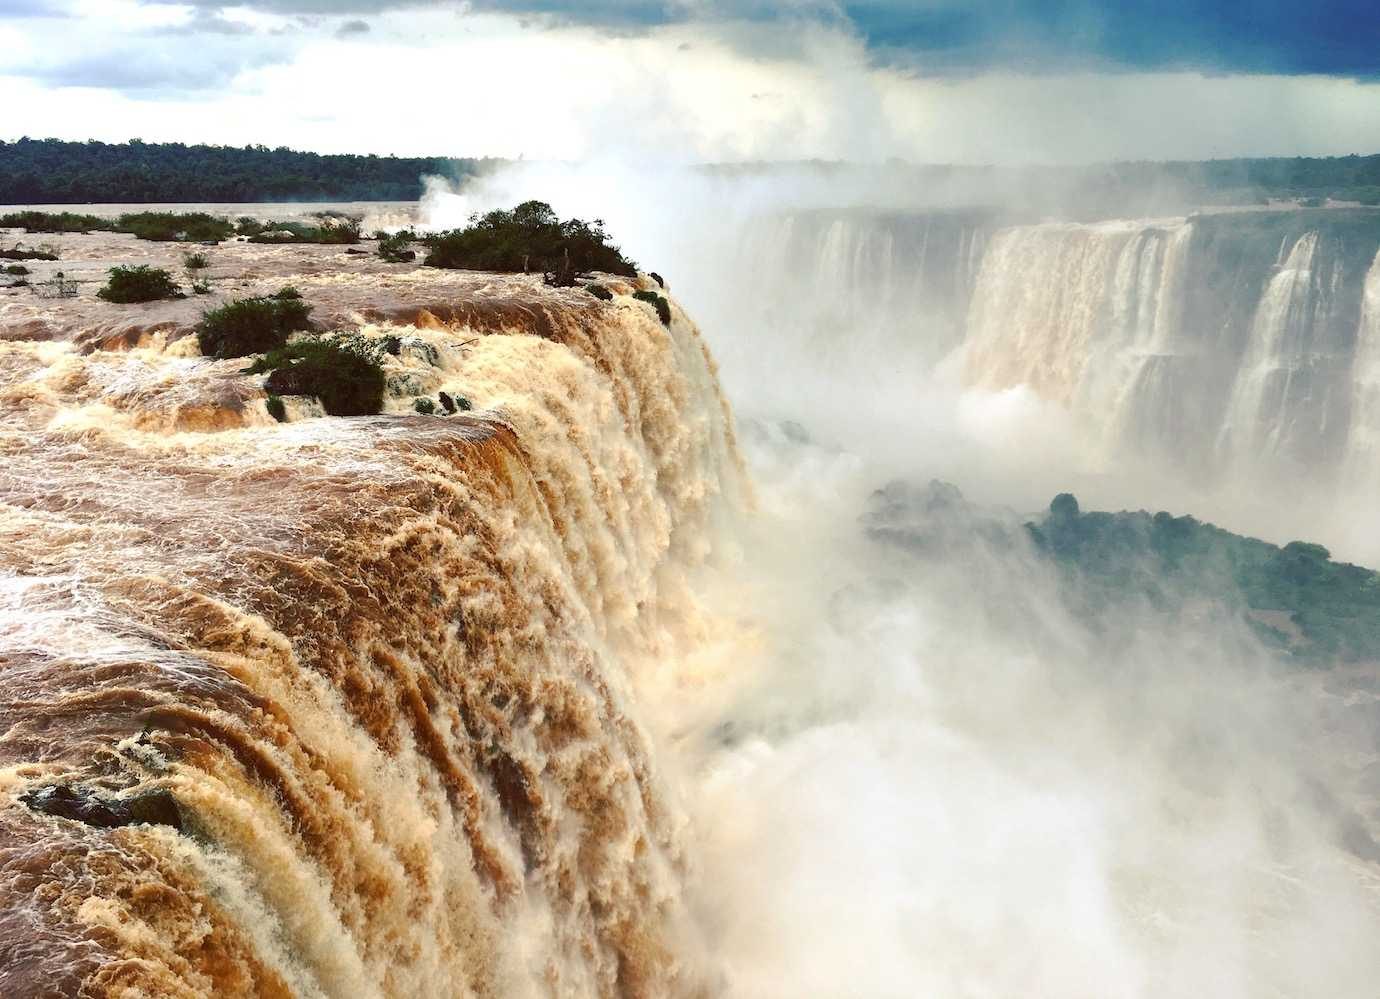 The Iguazu Falls – Visiting both sides